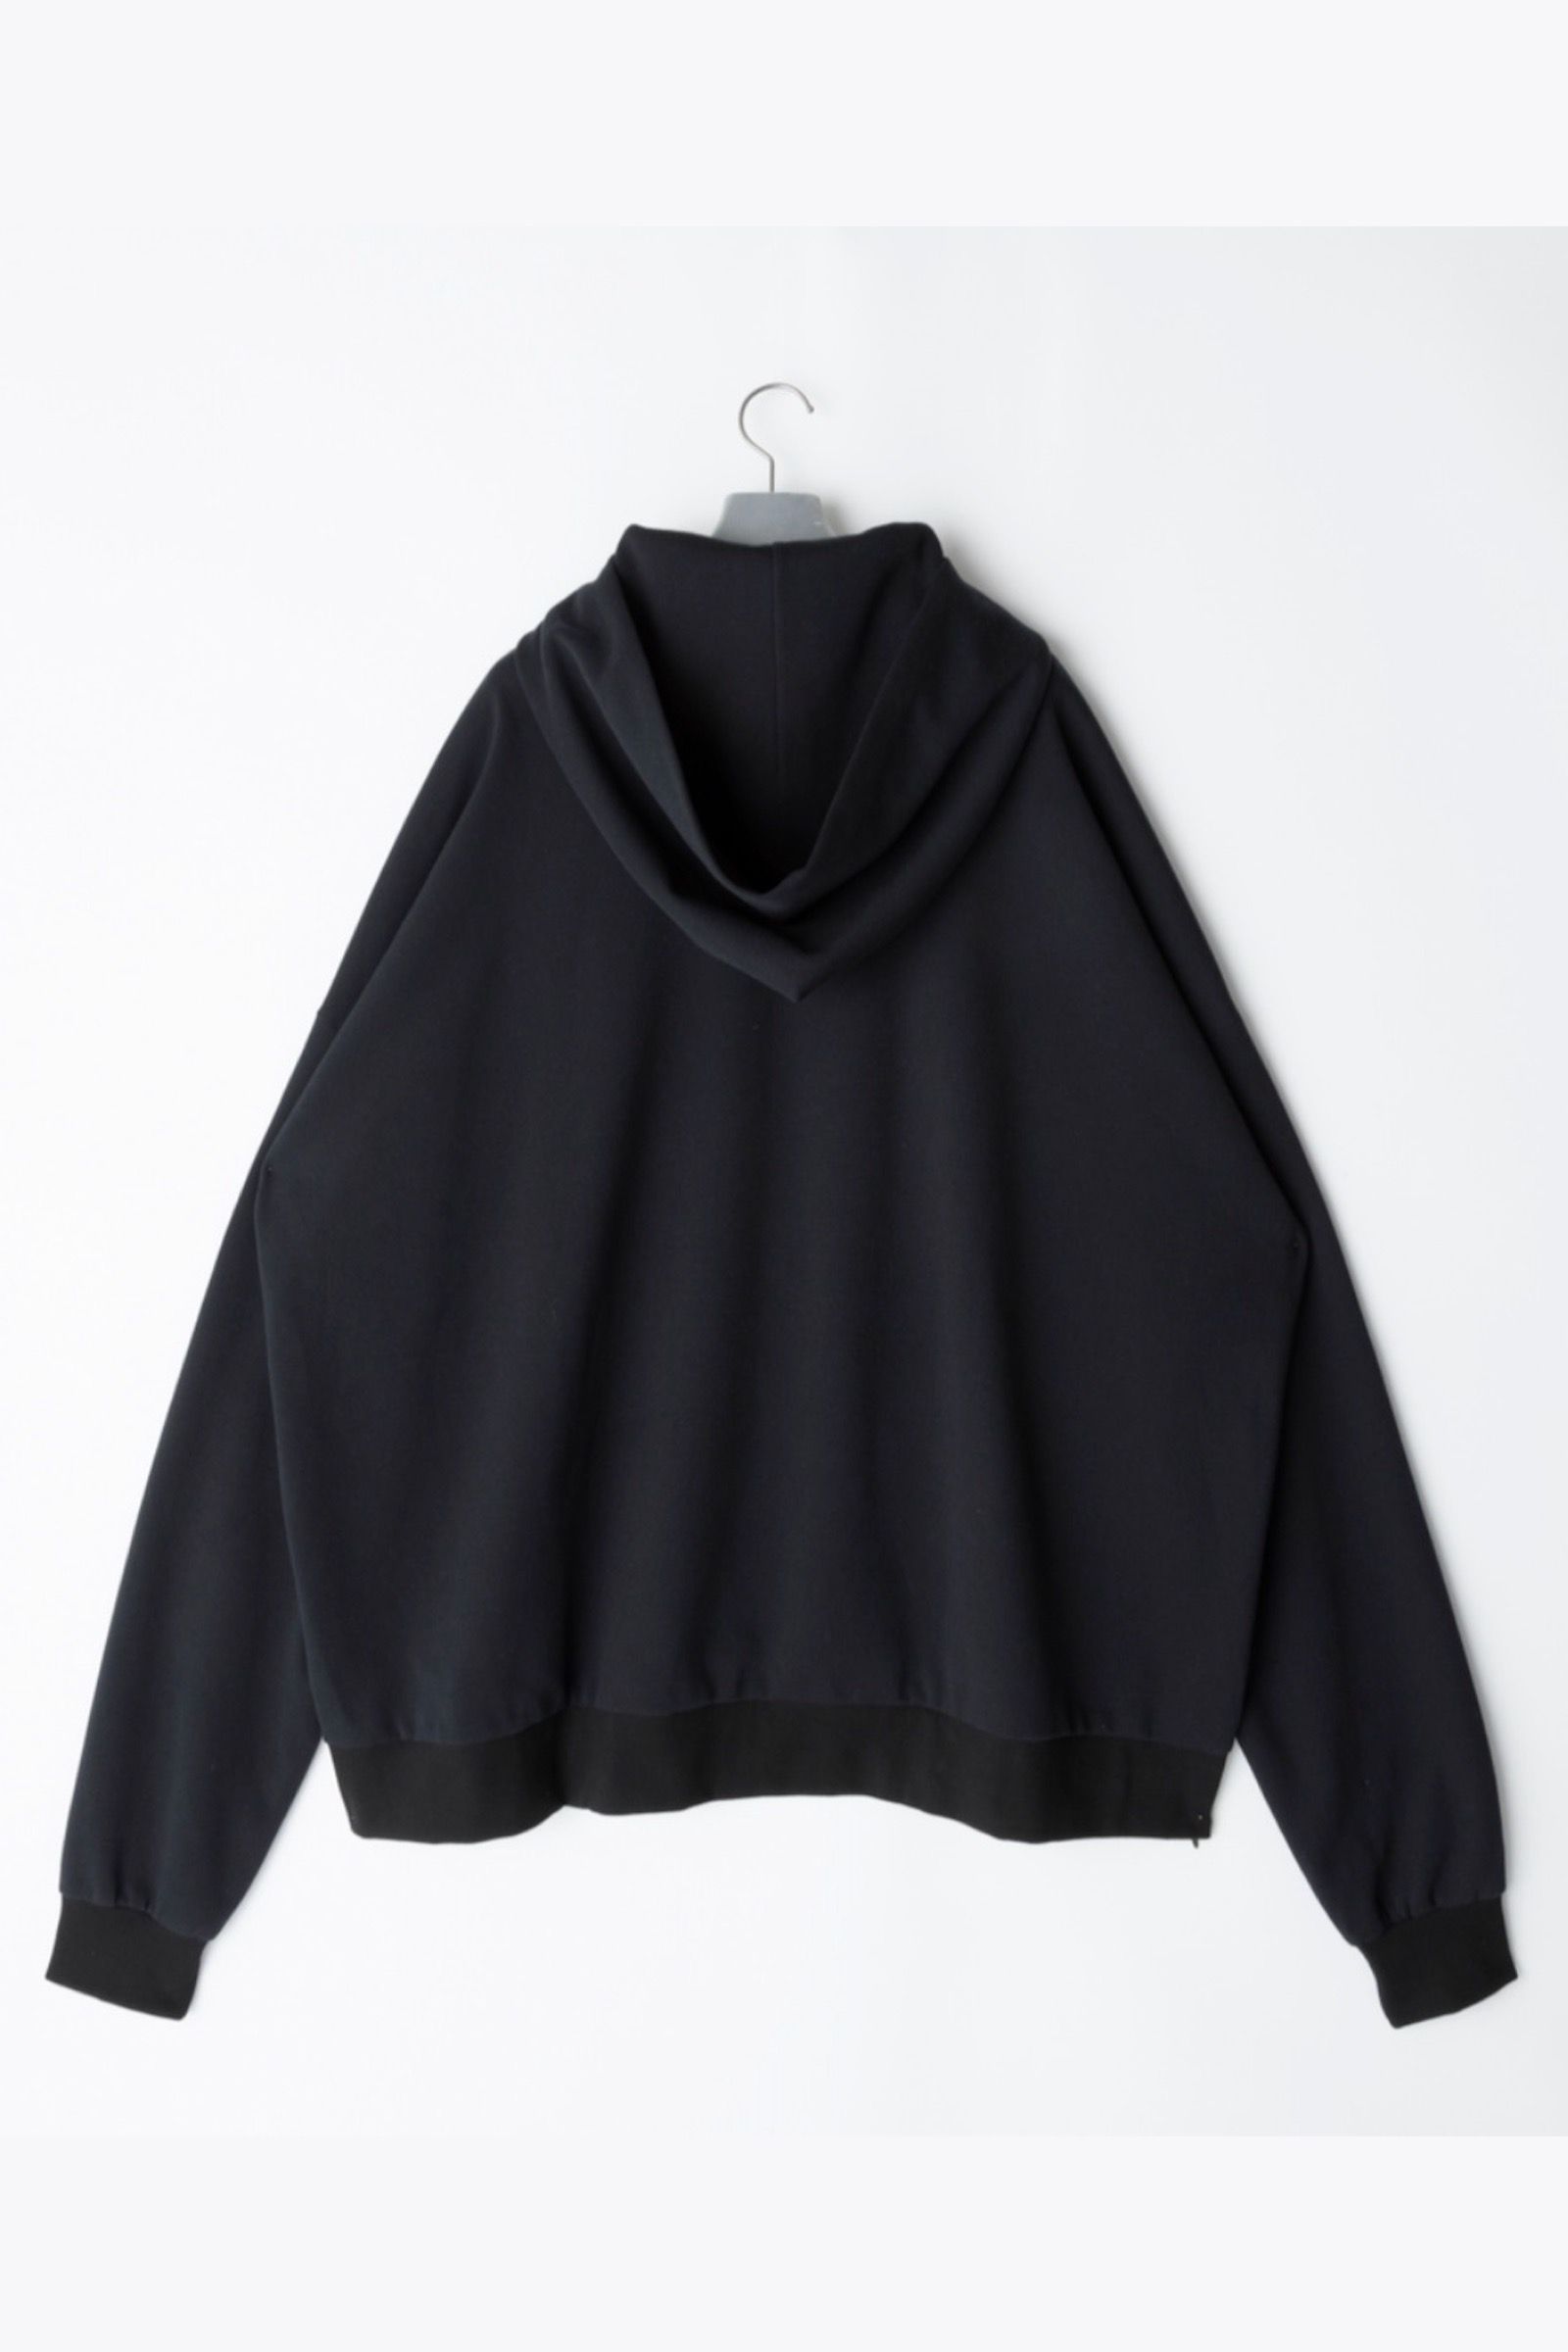 FUMITO GANRYU - 2way pull hoodie 22ss -dark gray- 1月22日発売 